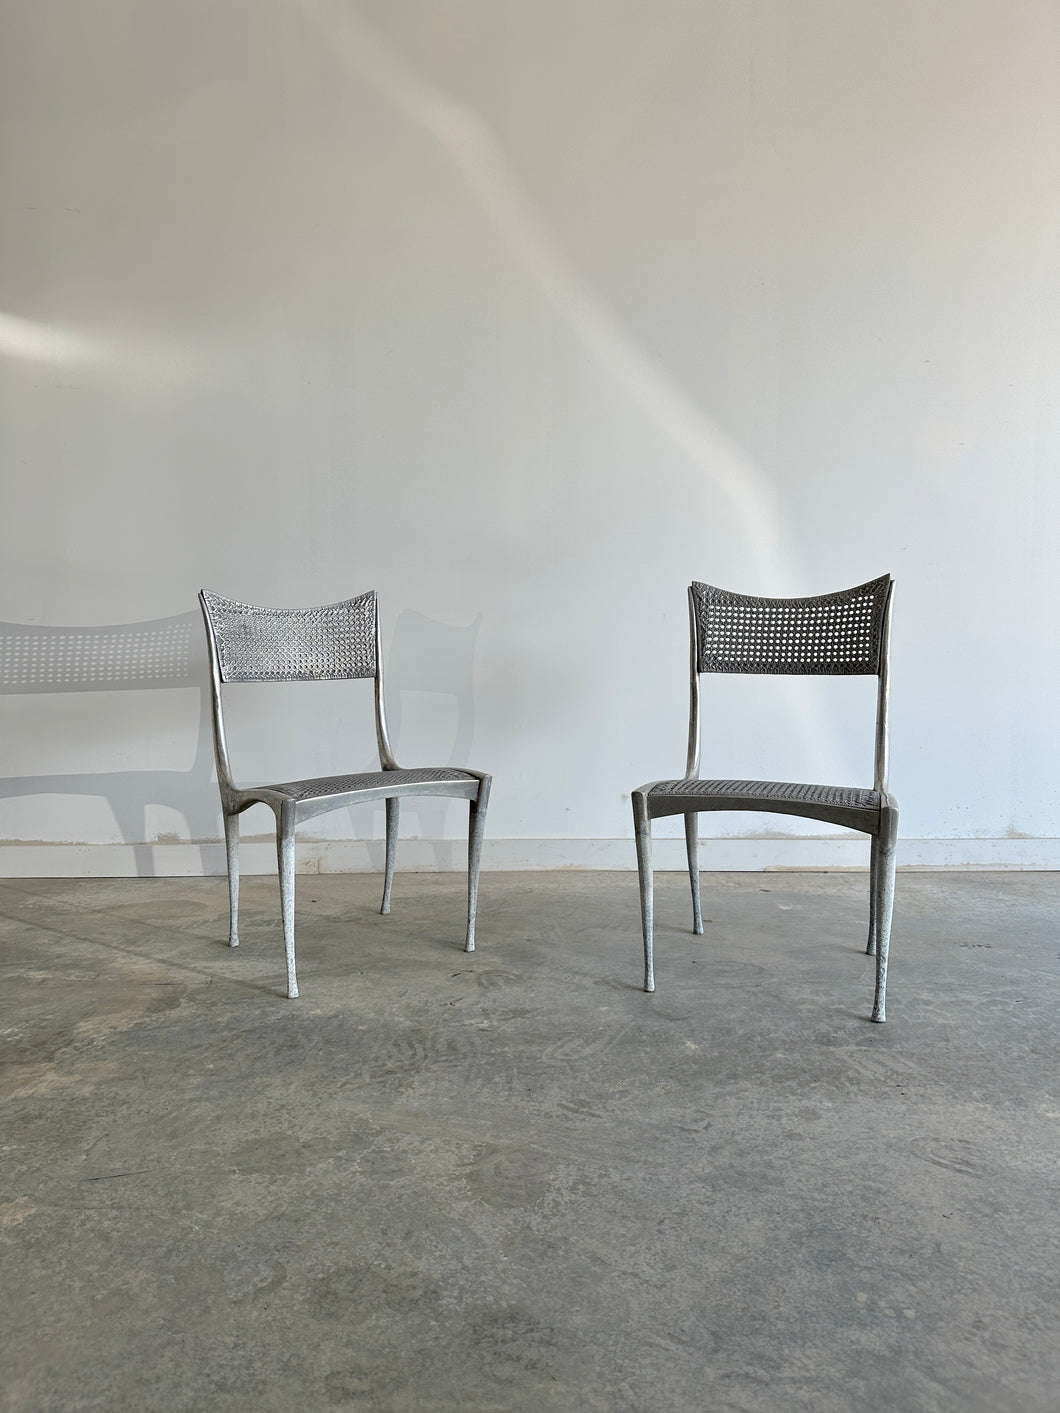 Gazelle 10B chairs in all cast aluminium by Dan Johnson